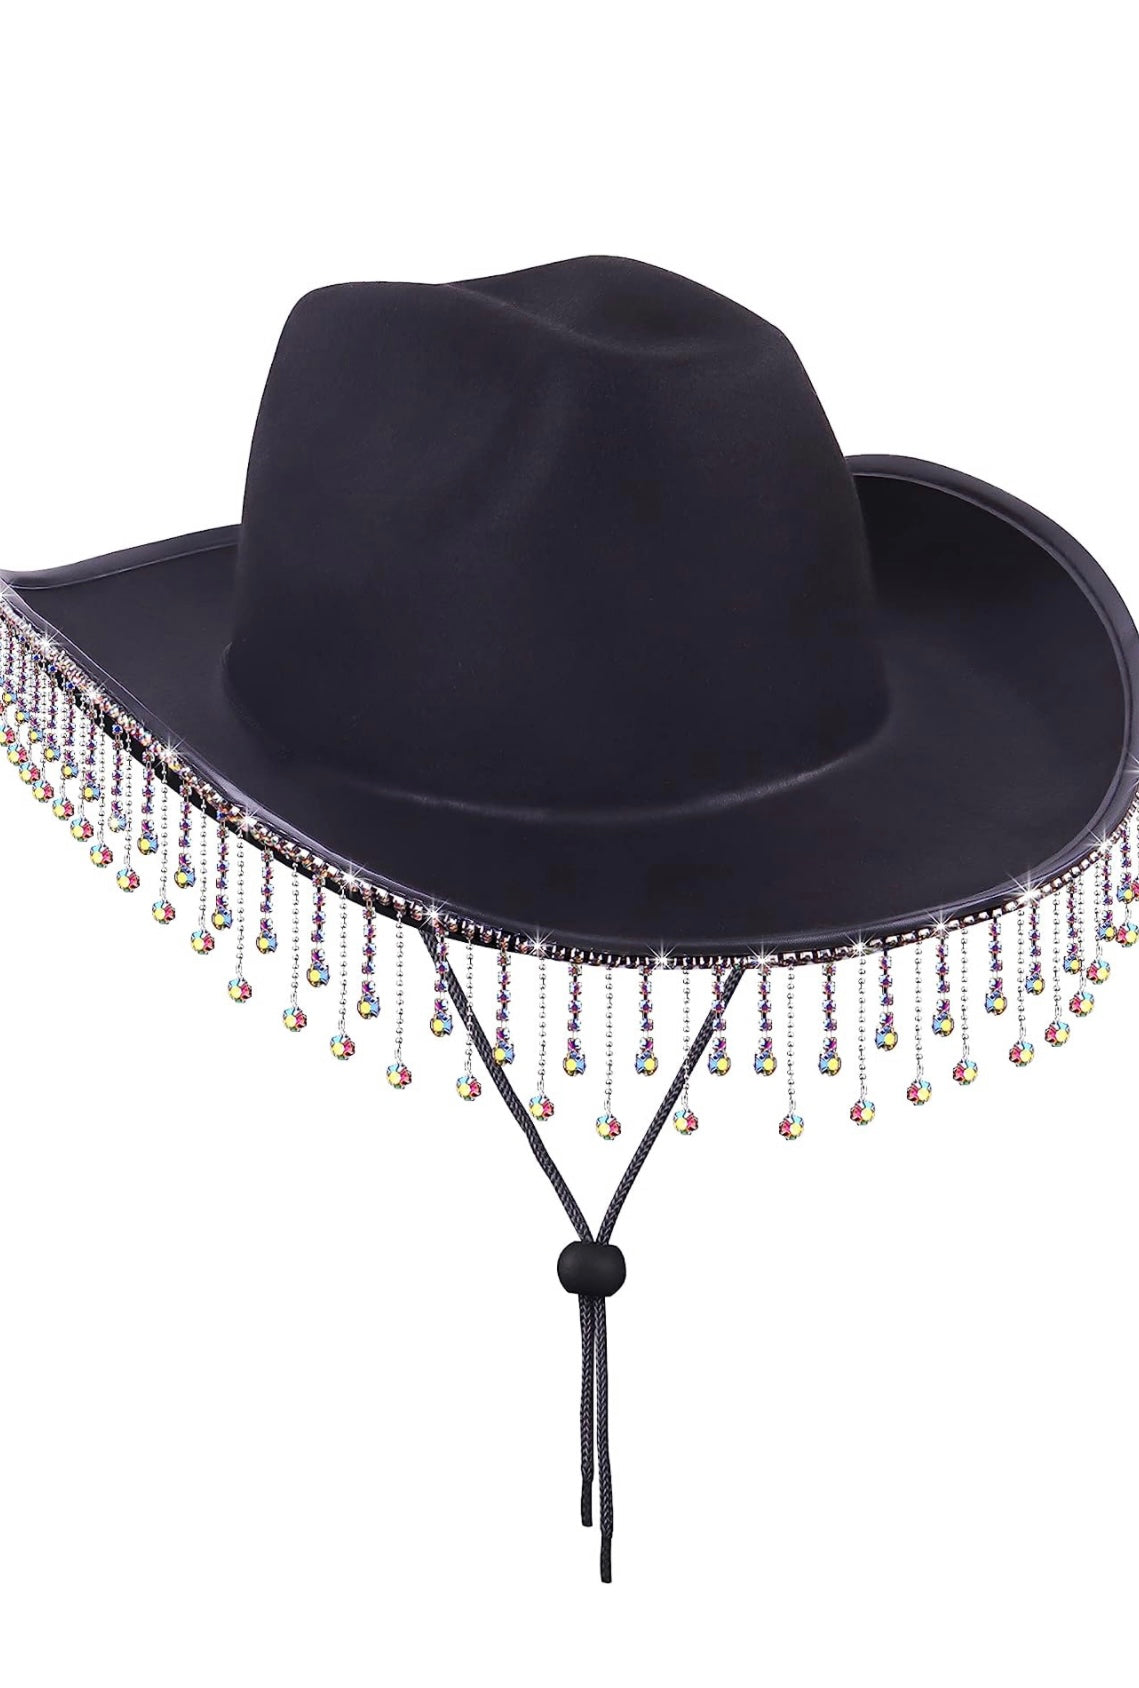 Beyoncé mirror-ball cowboy hat dupes: Where to buy